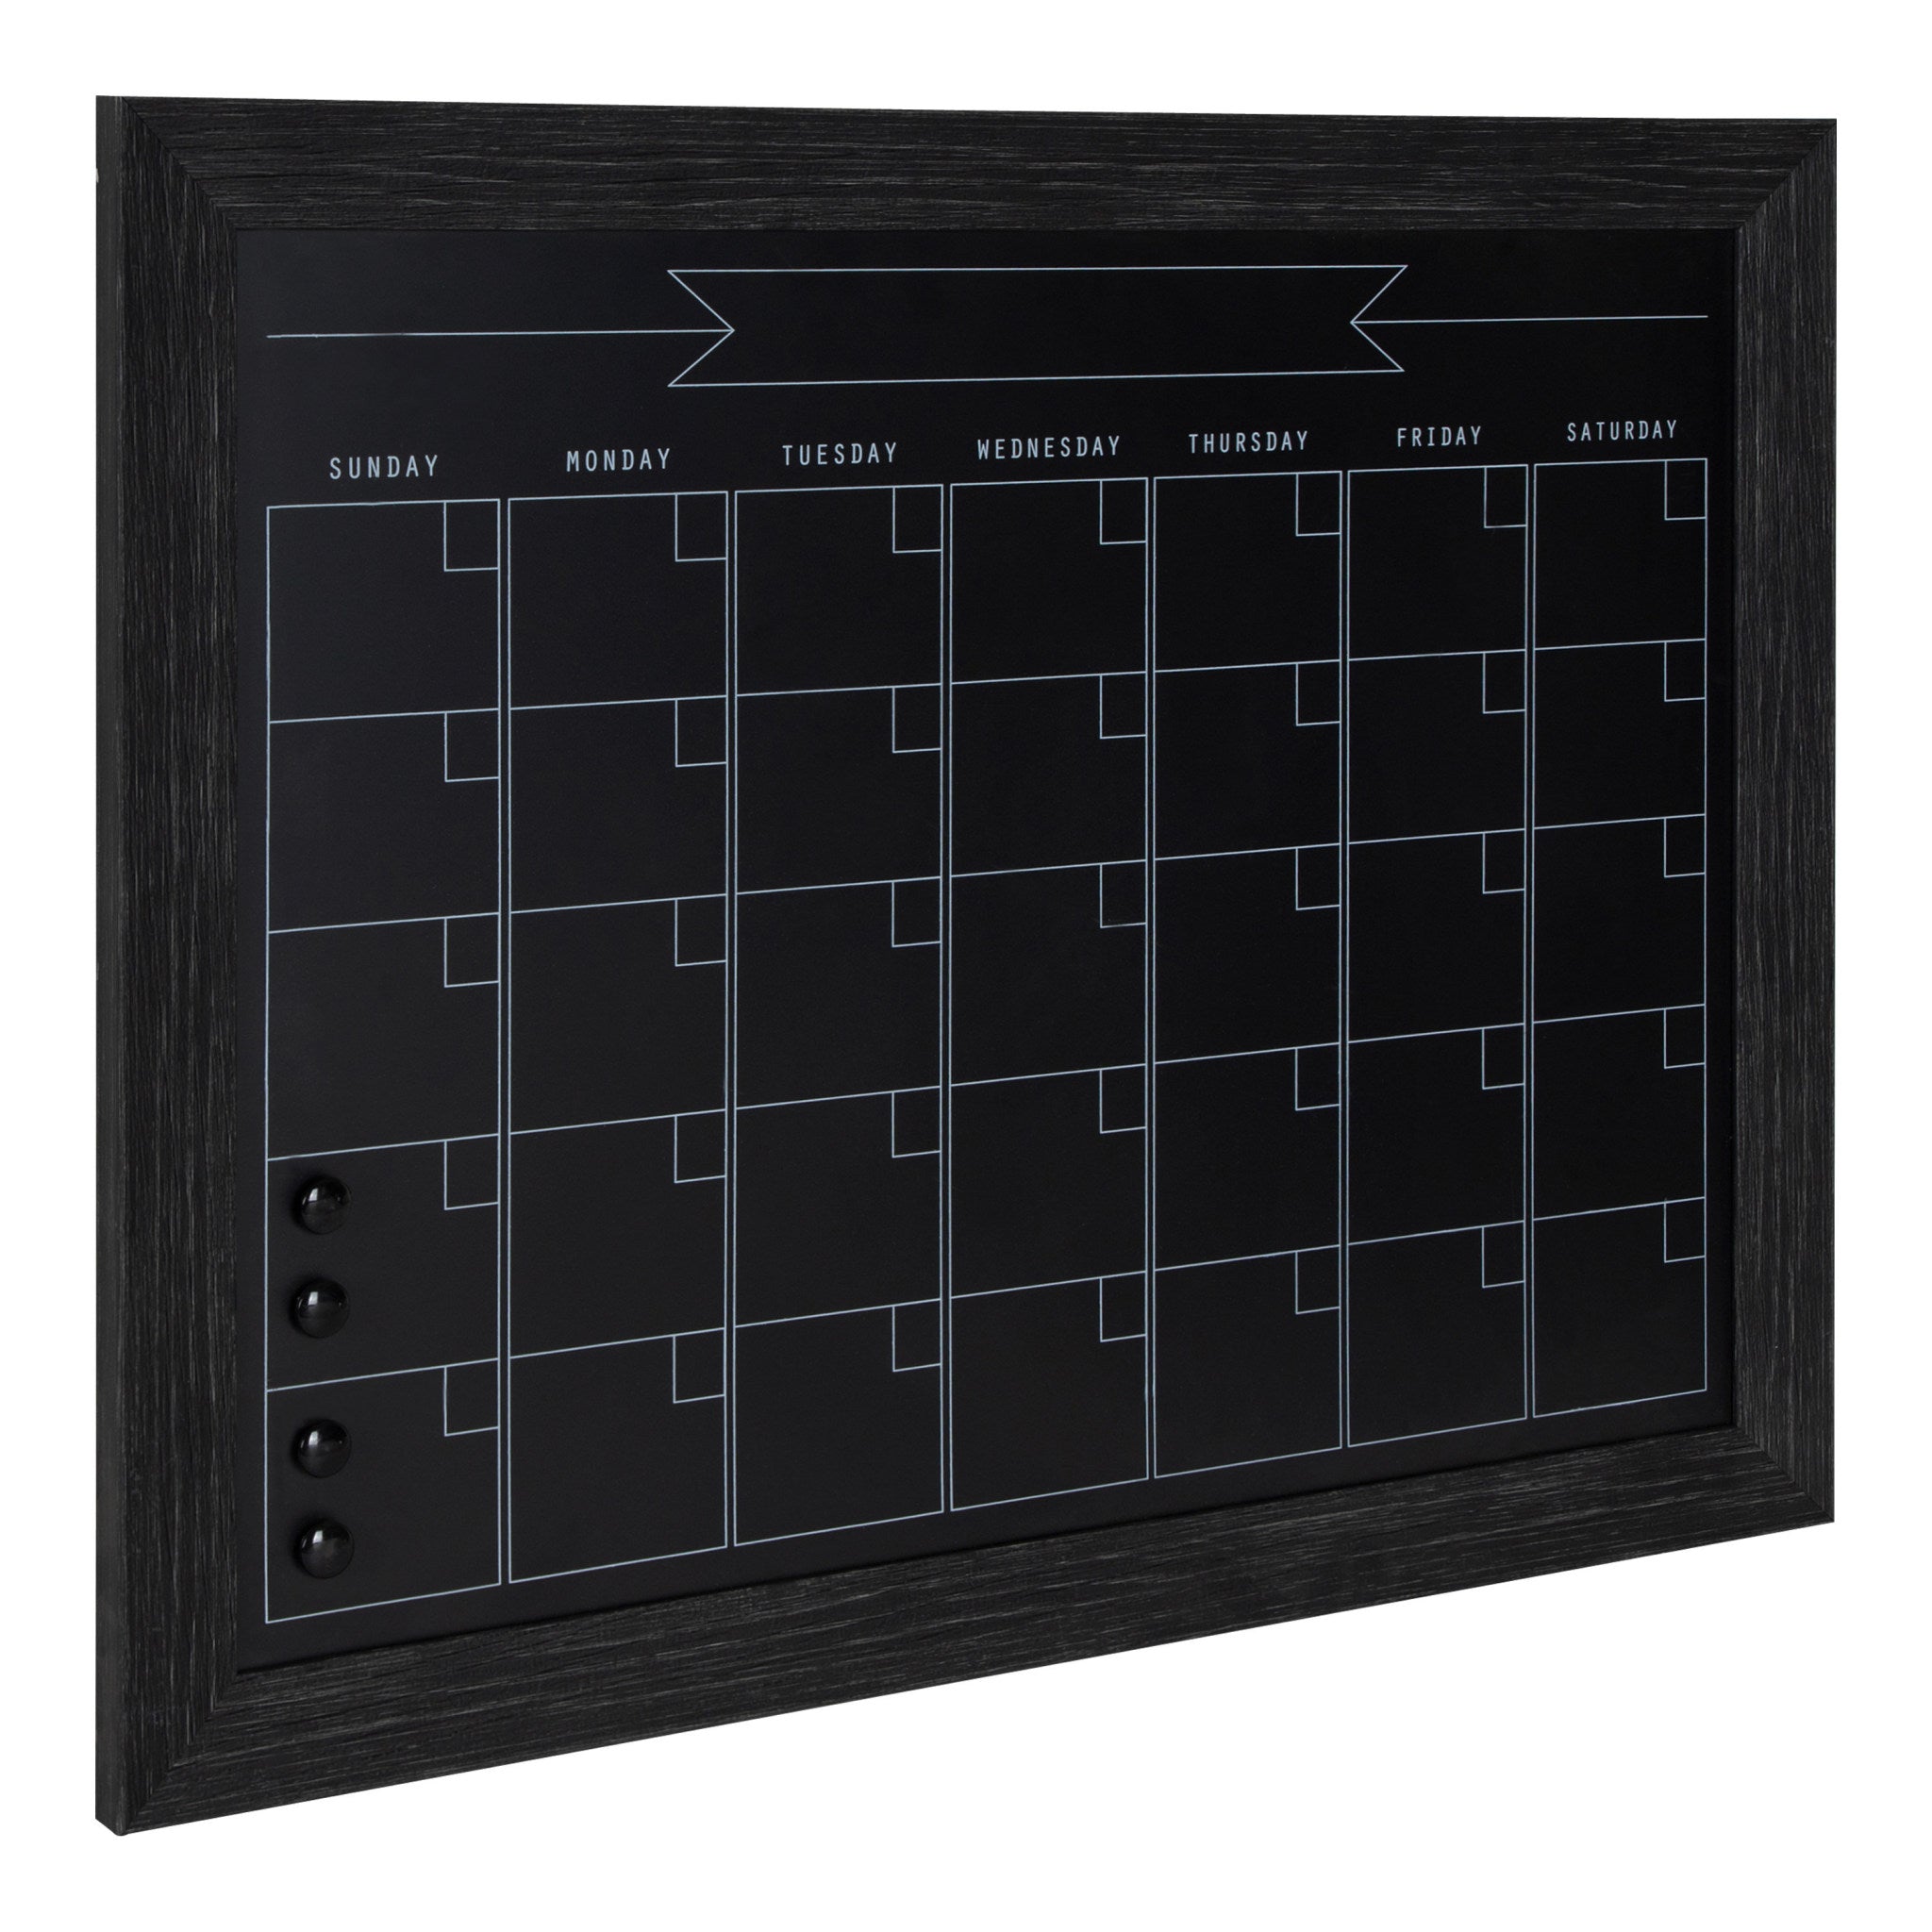 Beatrice Framed Magnetic Chalkboard Calendar